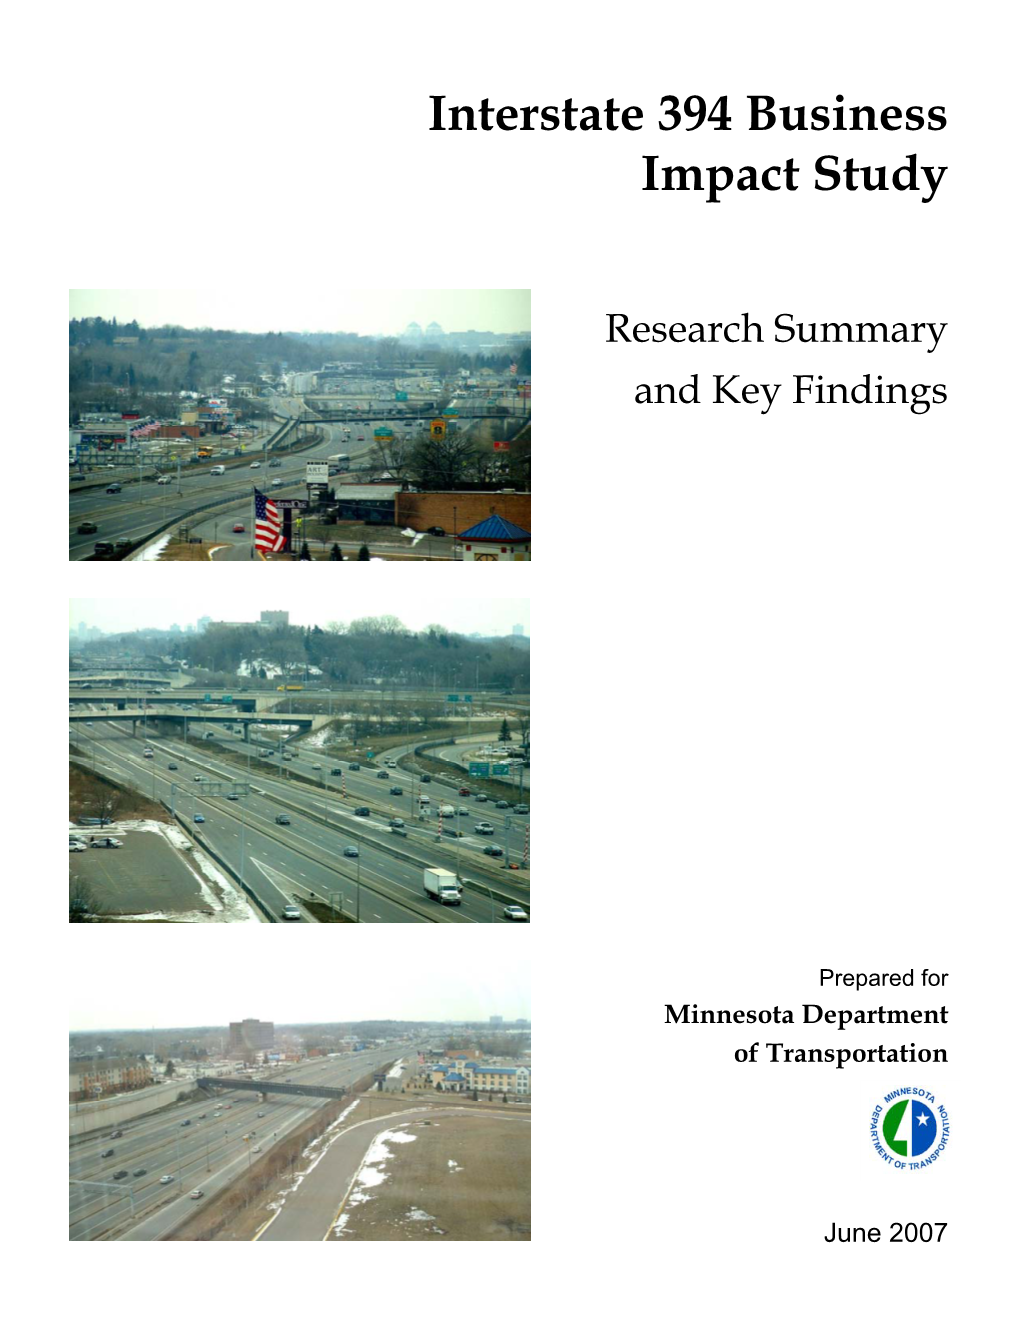 Interstate 394 Business Impact Study